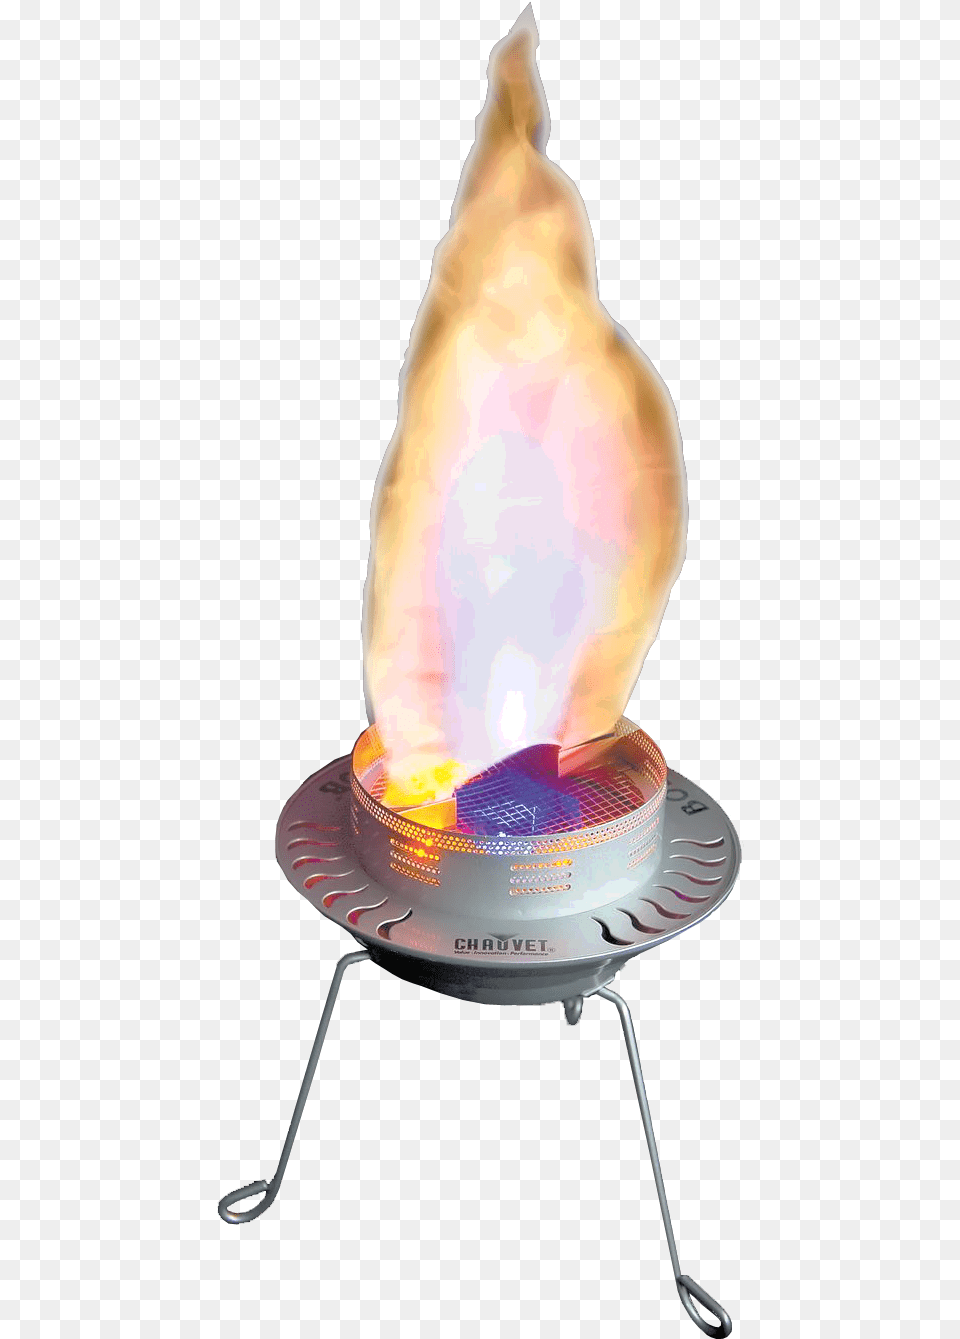 Chauvet Bob Led Flame Effect Light, Bbq, Cooking, Food, Grilling Free Transparent Png